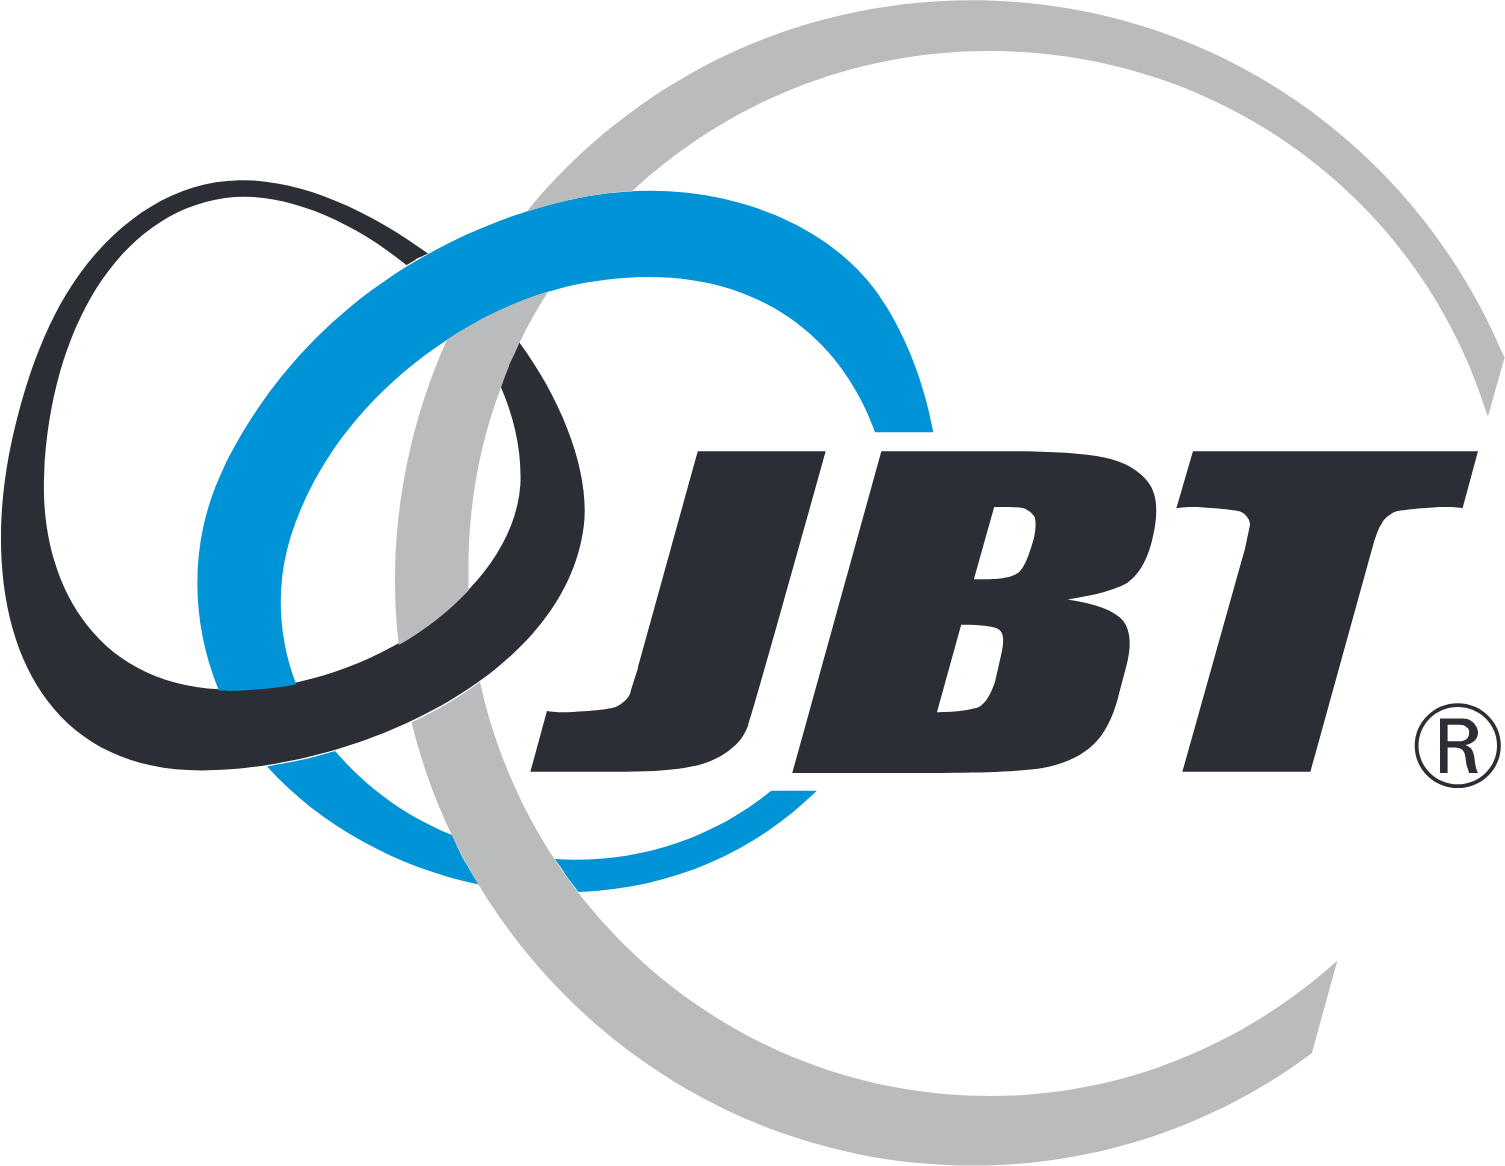 John Bean Technologies logo large (transparent PNG)